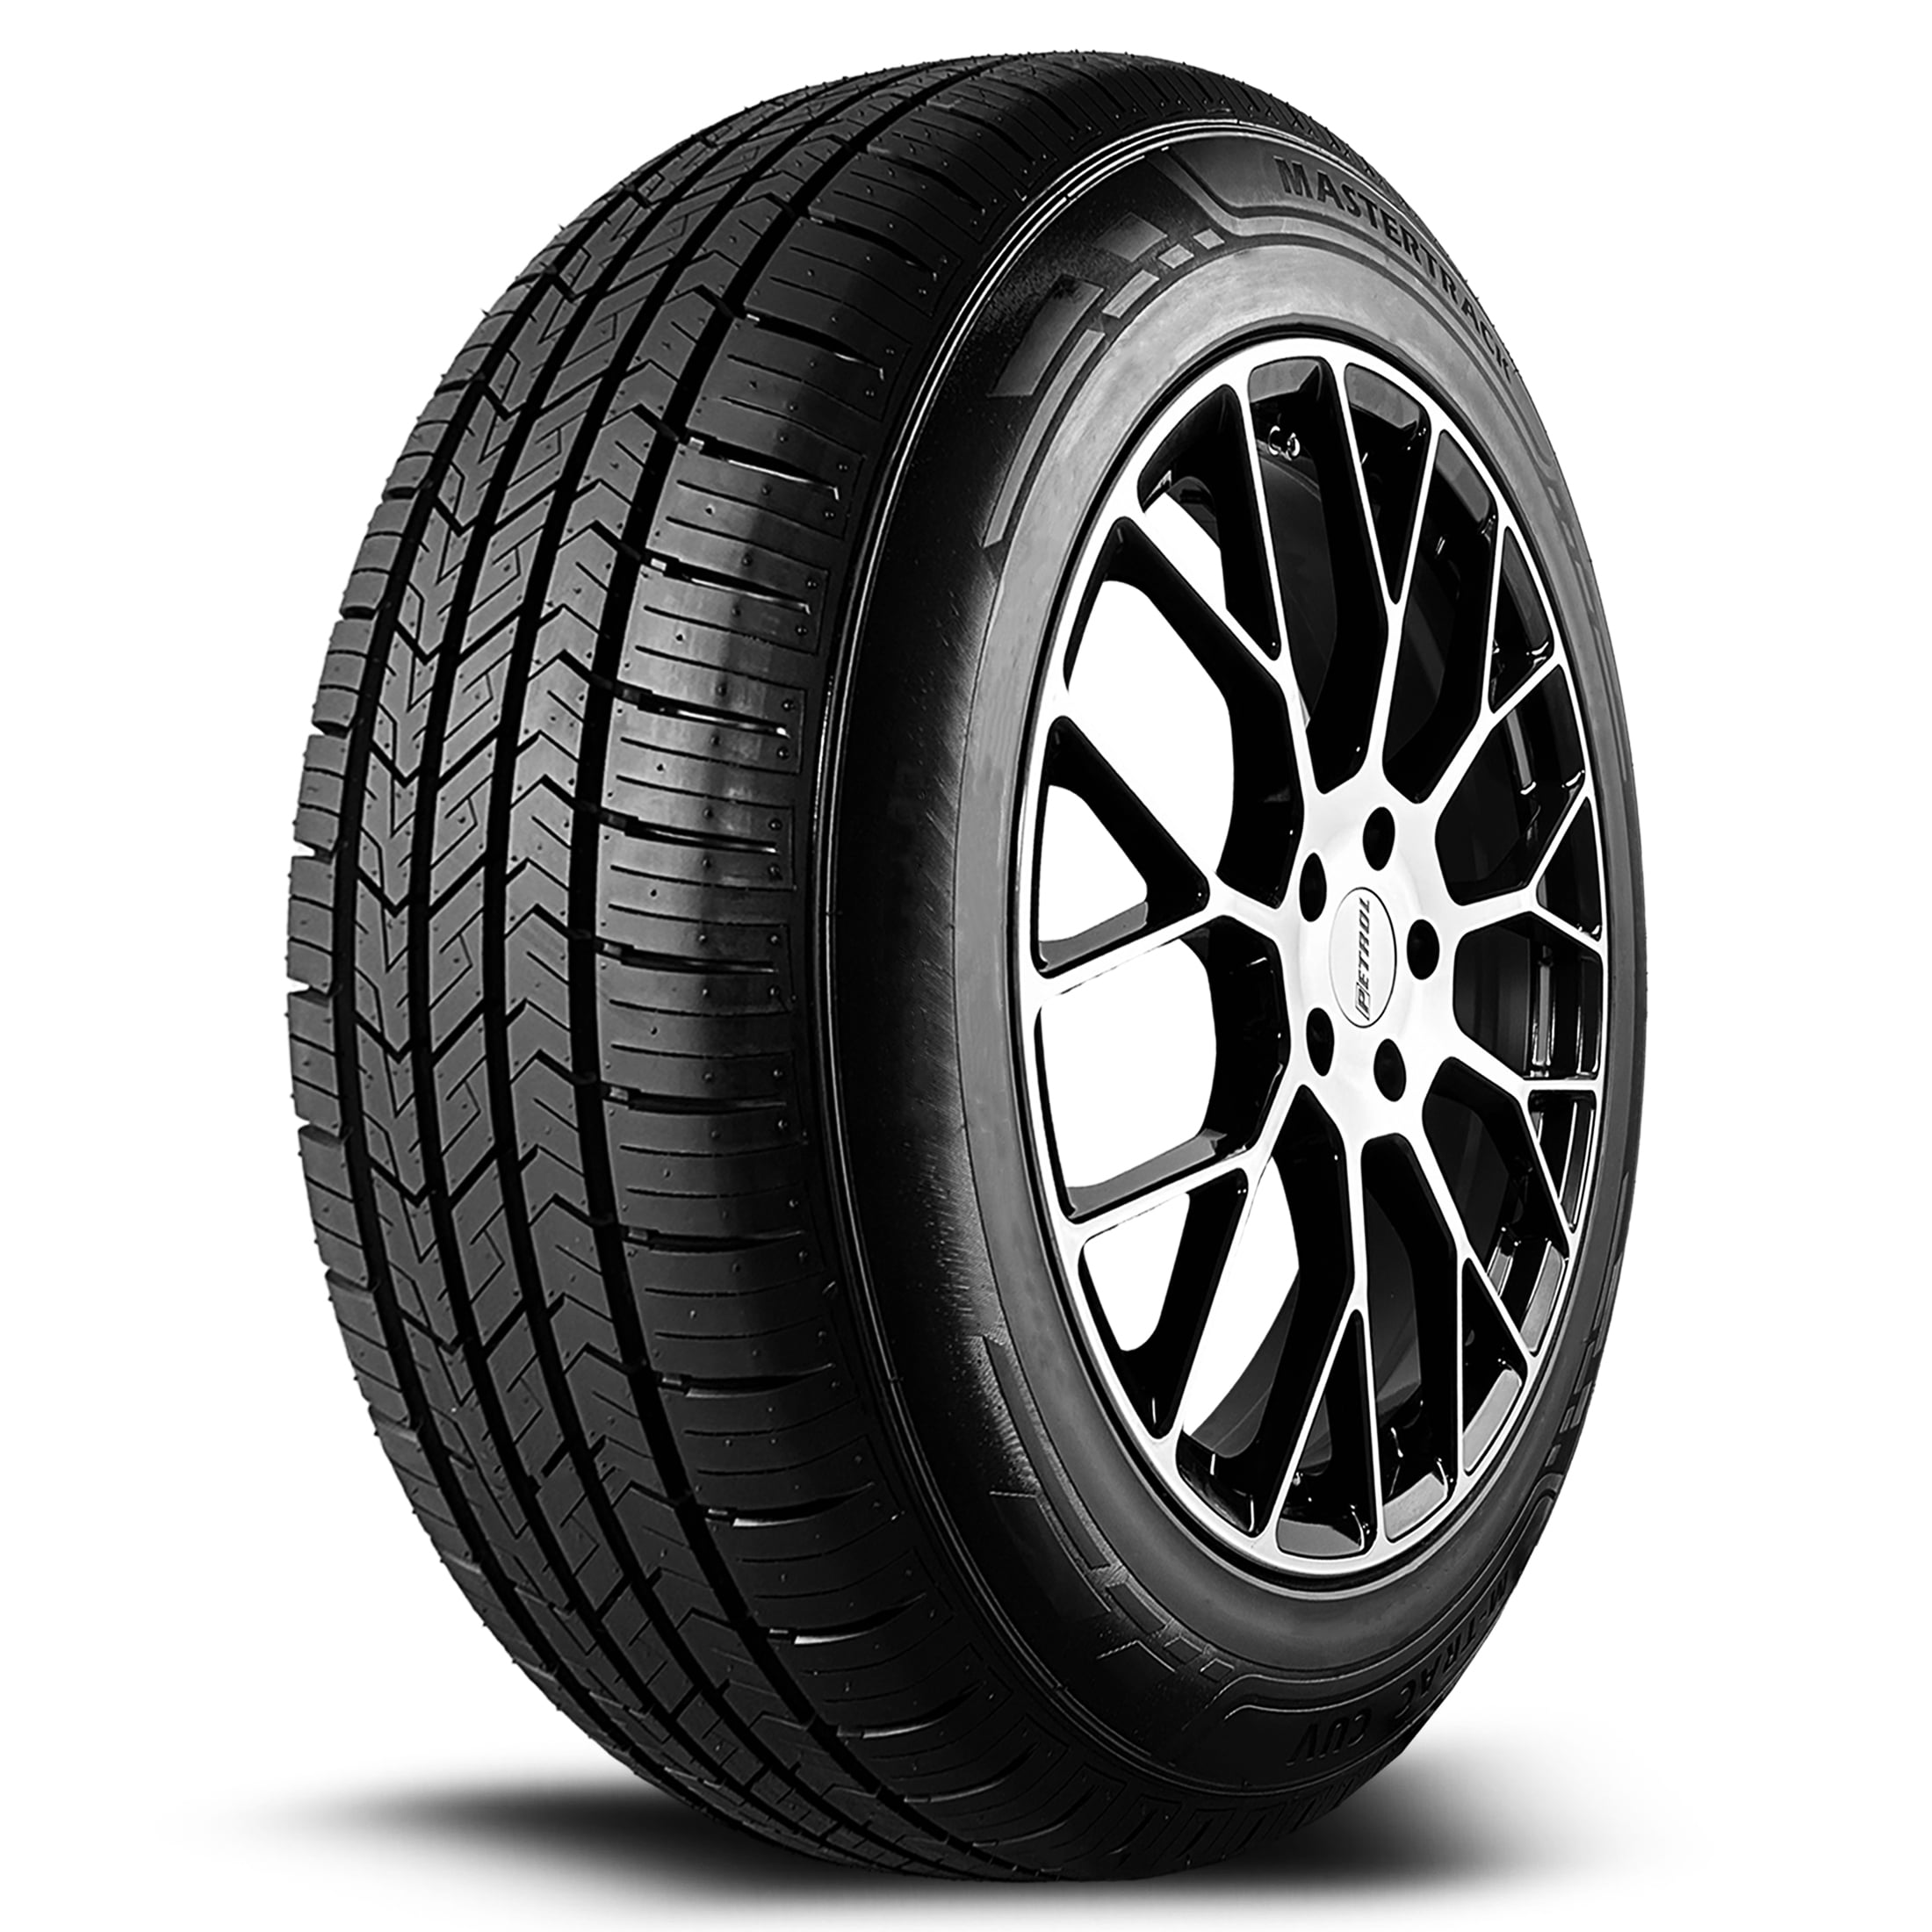 Goodyear Assurance Outlast 235/65R17 104H All-Season Tire